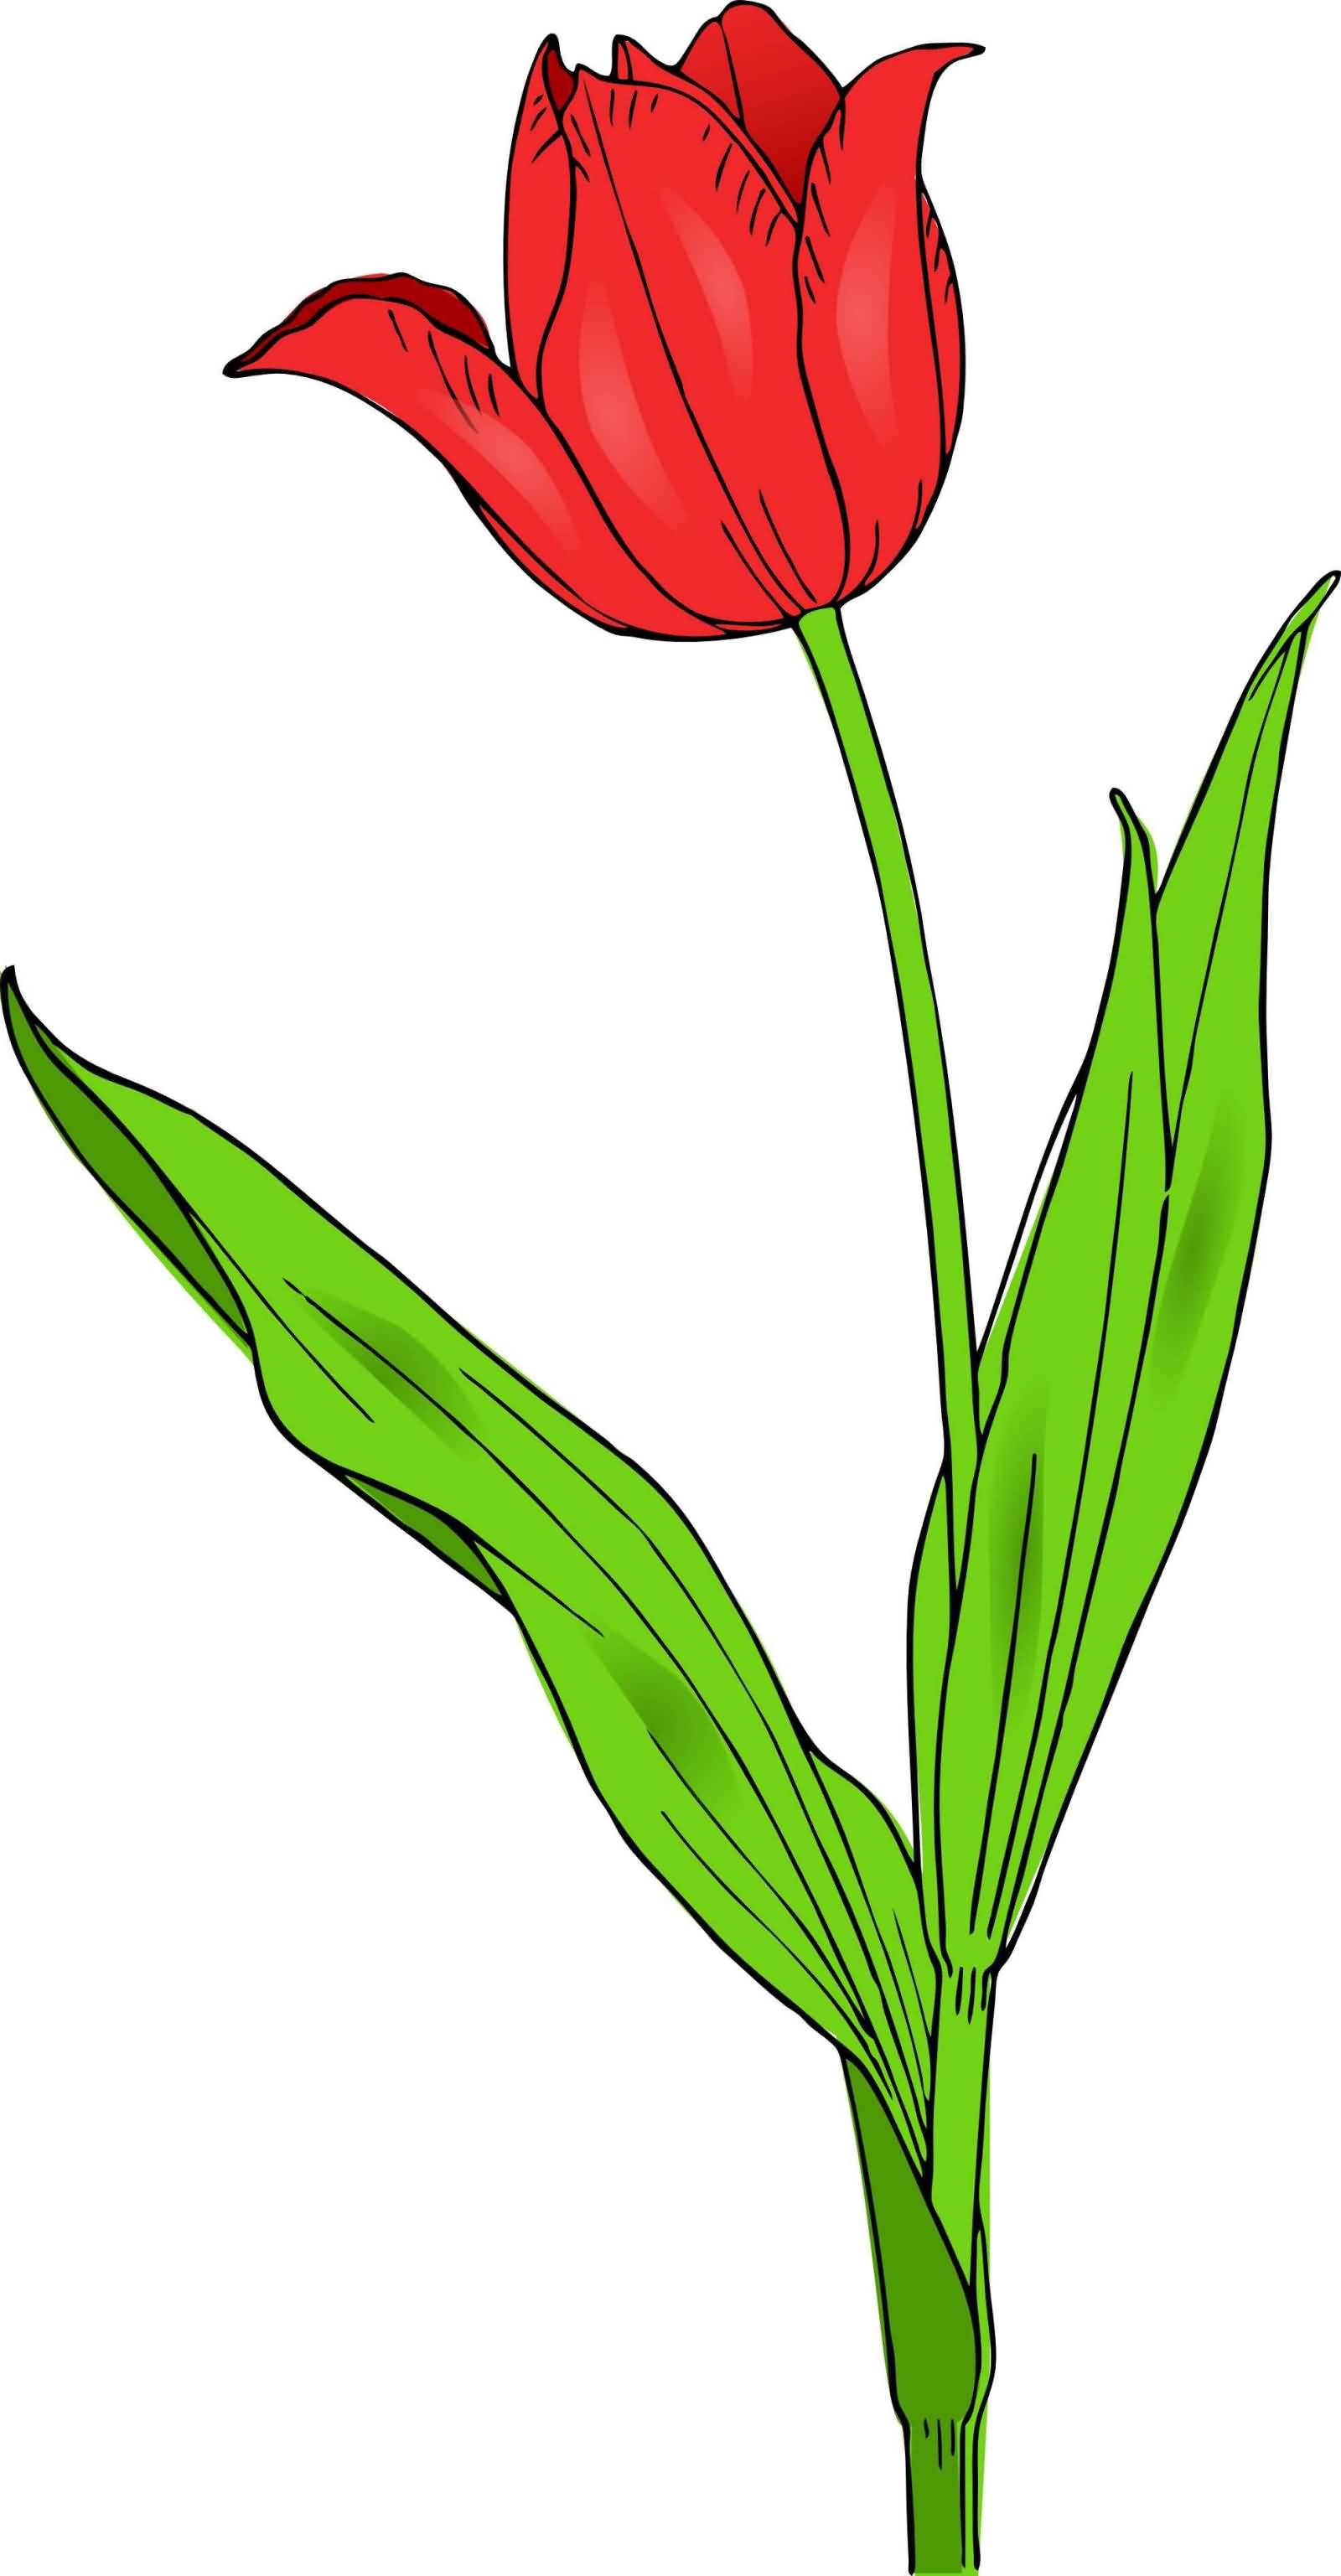 Red Tulip Flower Tattoo Design